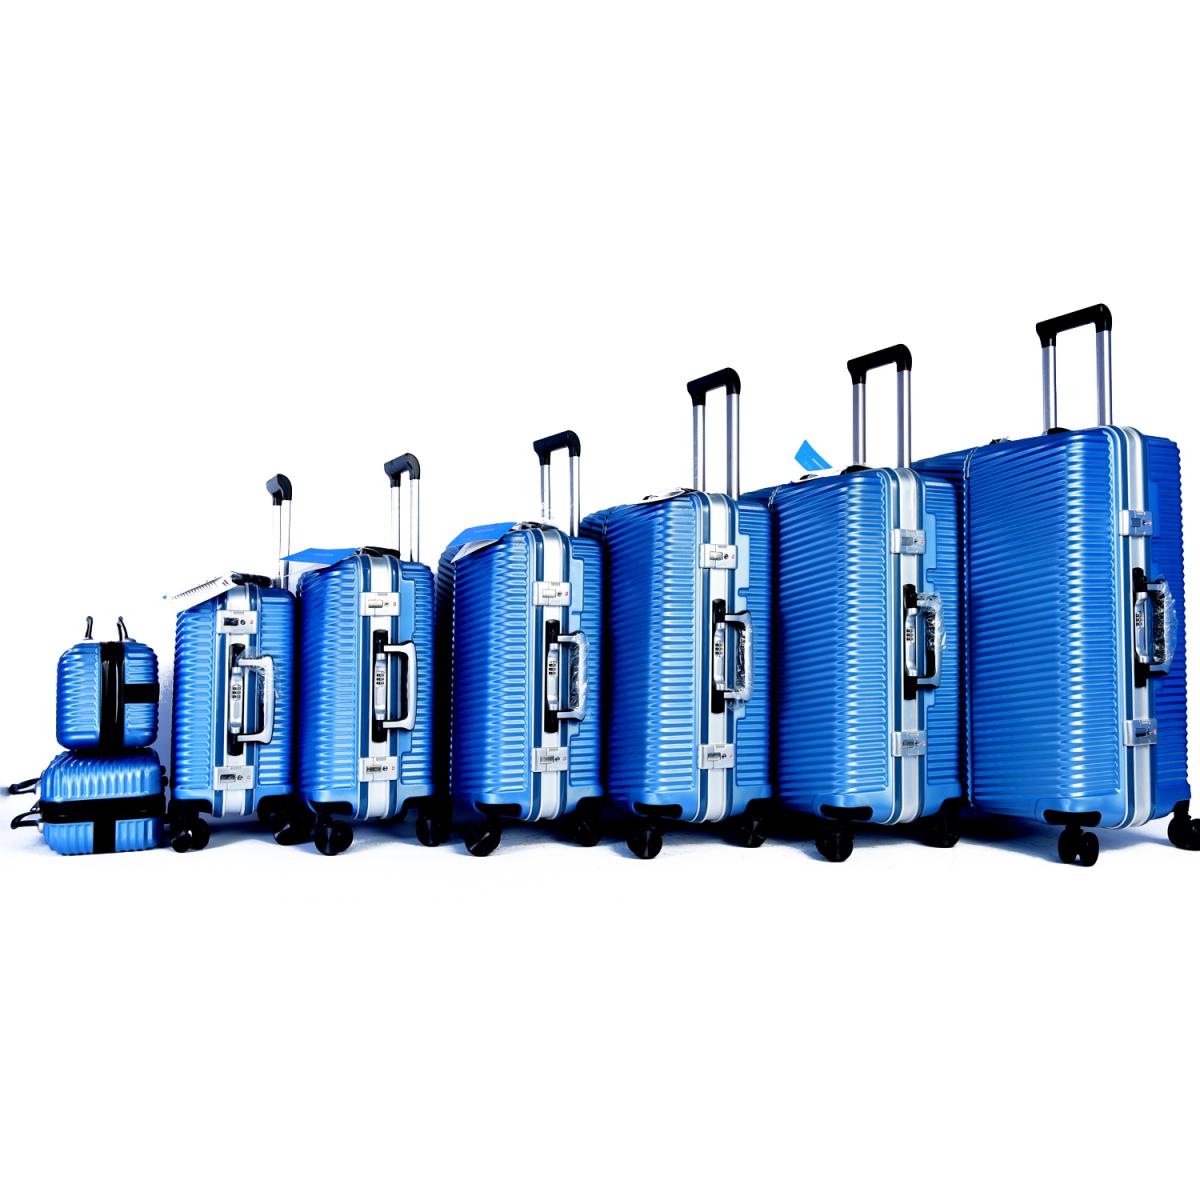 Aluminium Luggage 8 Pieces Set Blue Color